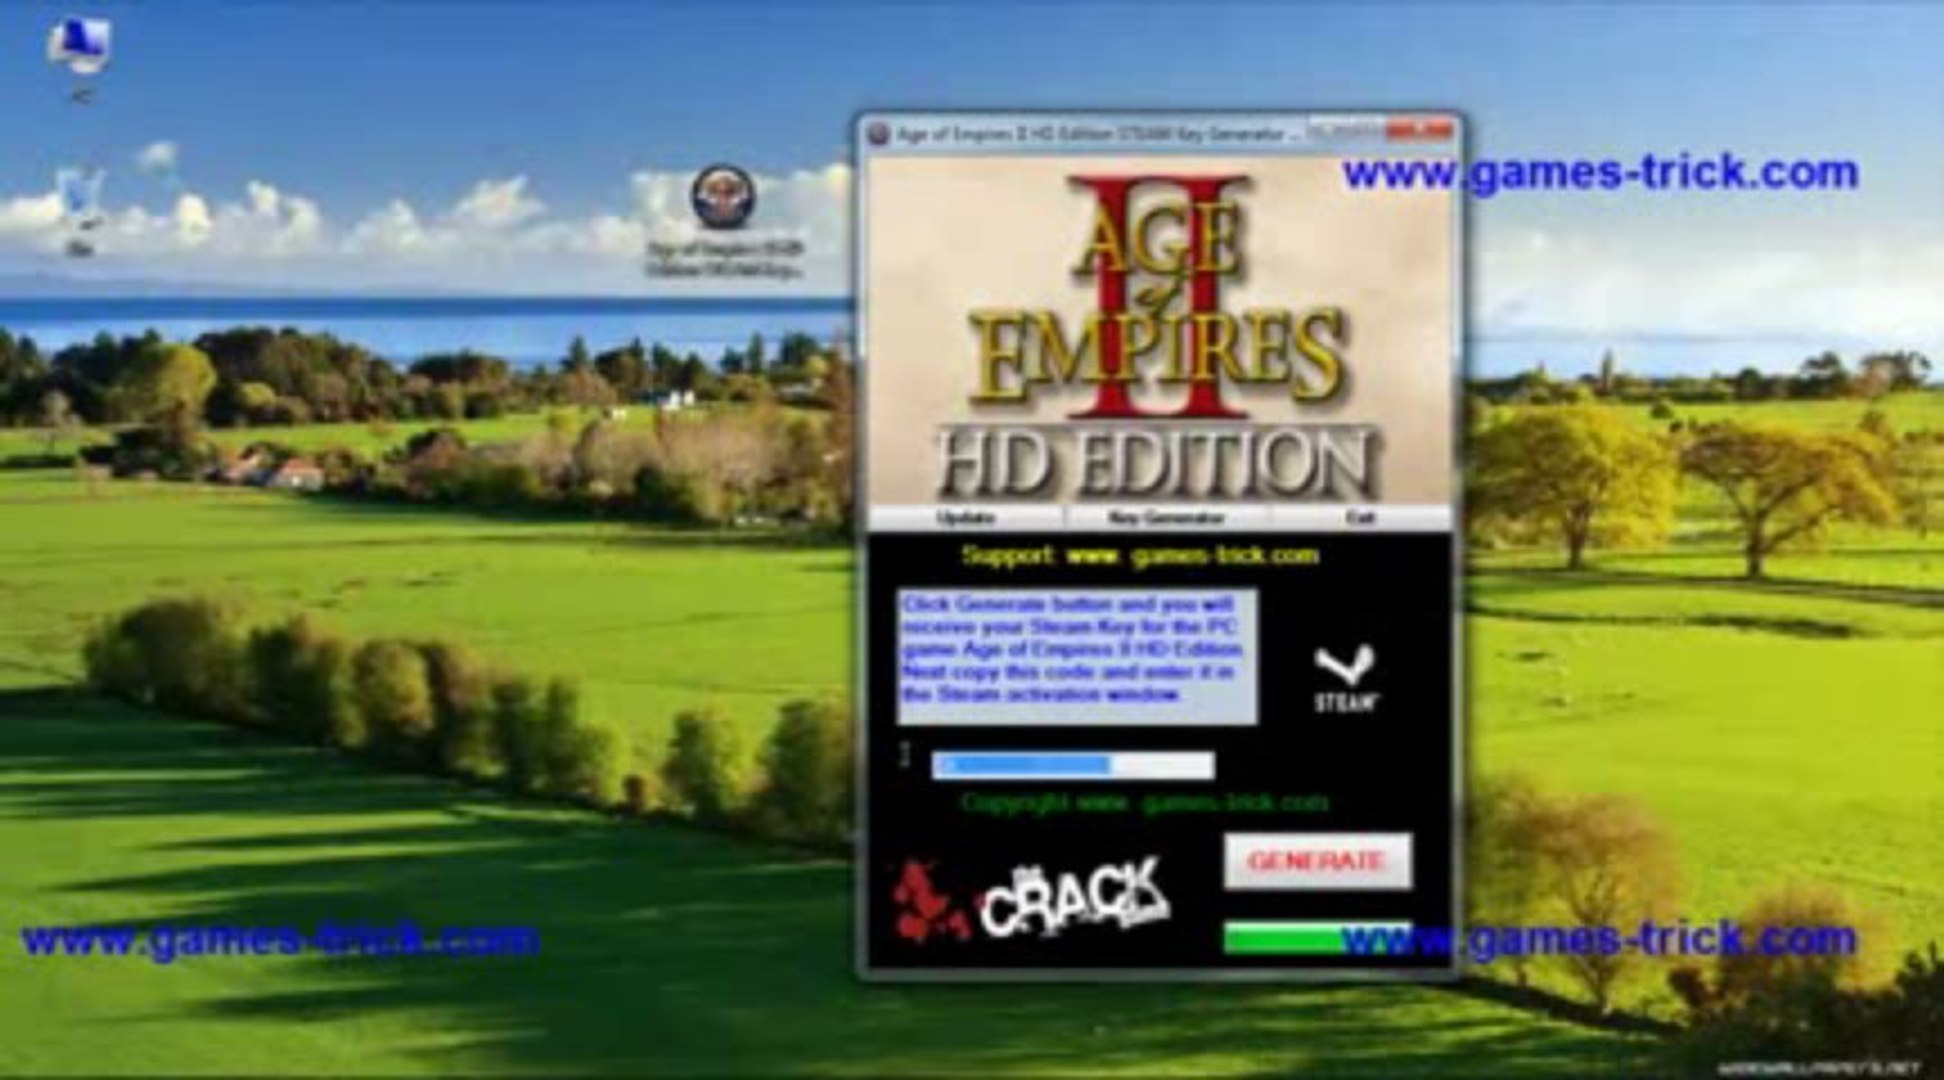 Age of empires ii hd edition steam key generator free